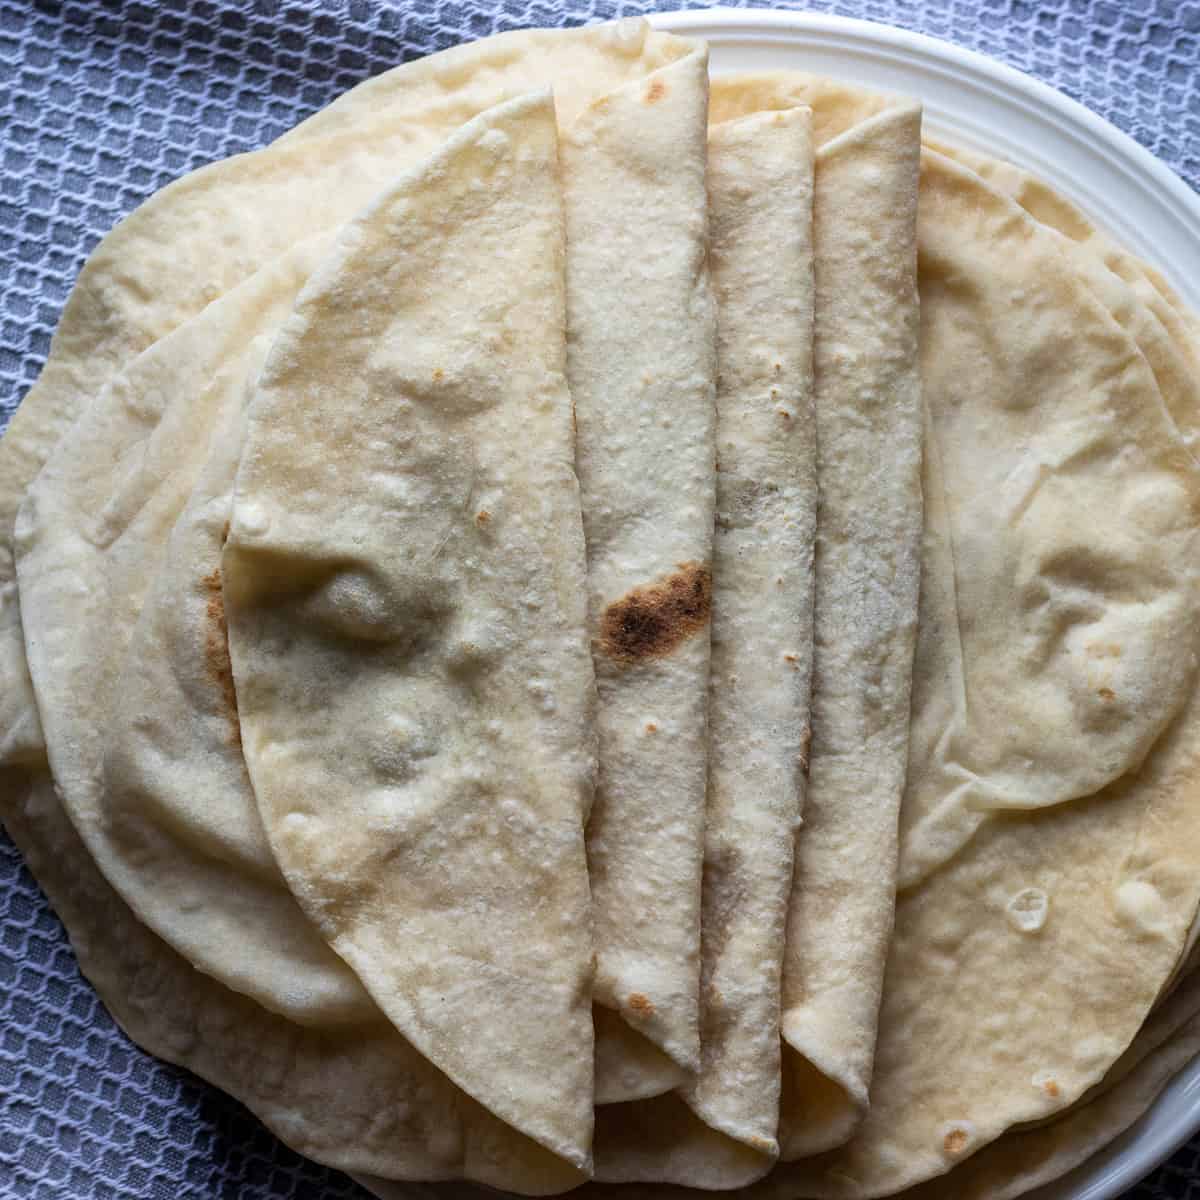 طرز تهیه نان لواش خاورمیانه